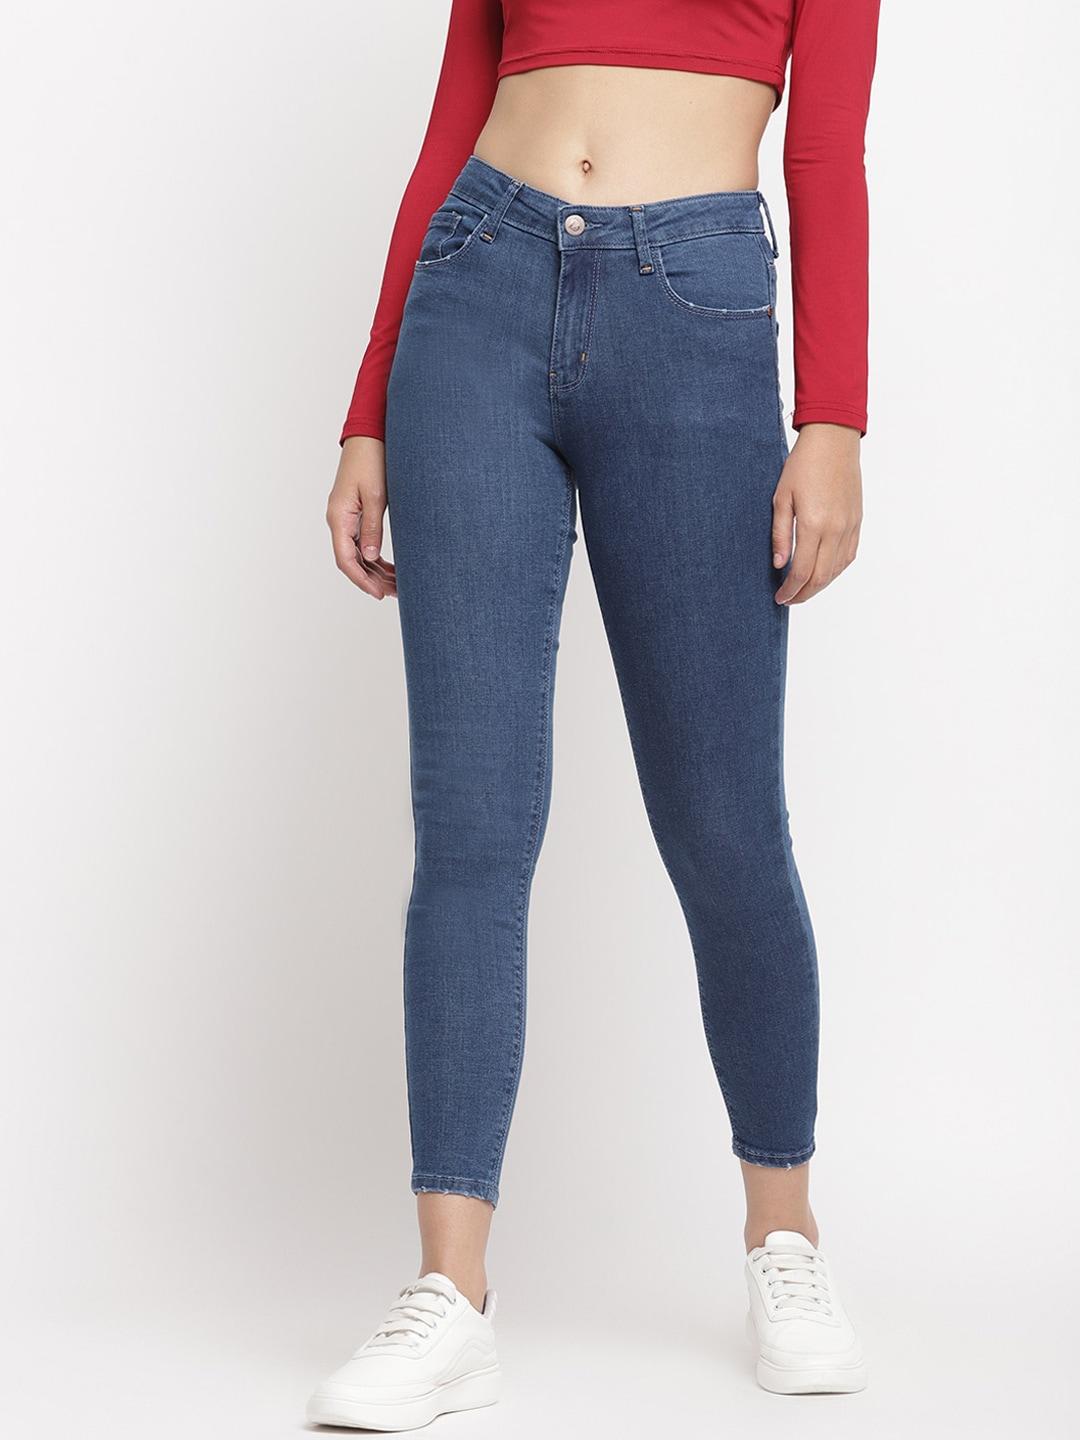 belliskey-women-blue-super-skinny-fit-mid-rise-clean-look-jeans